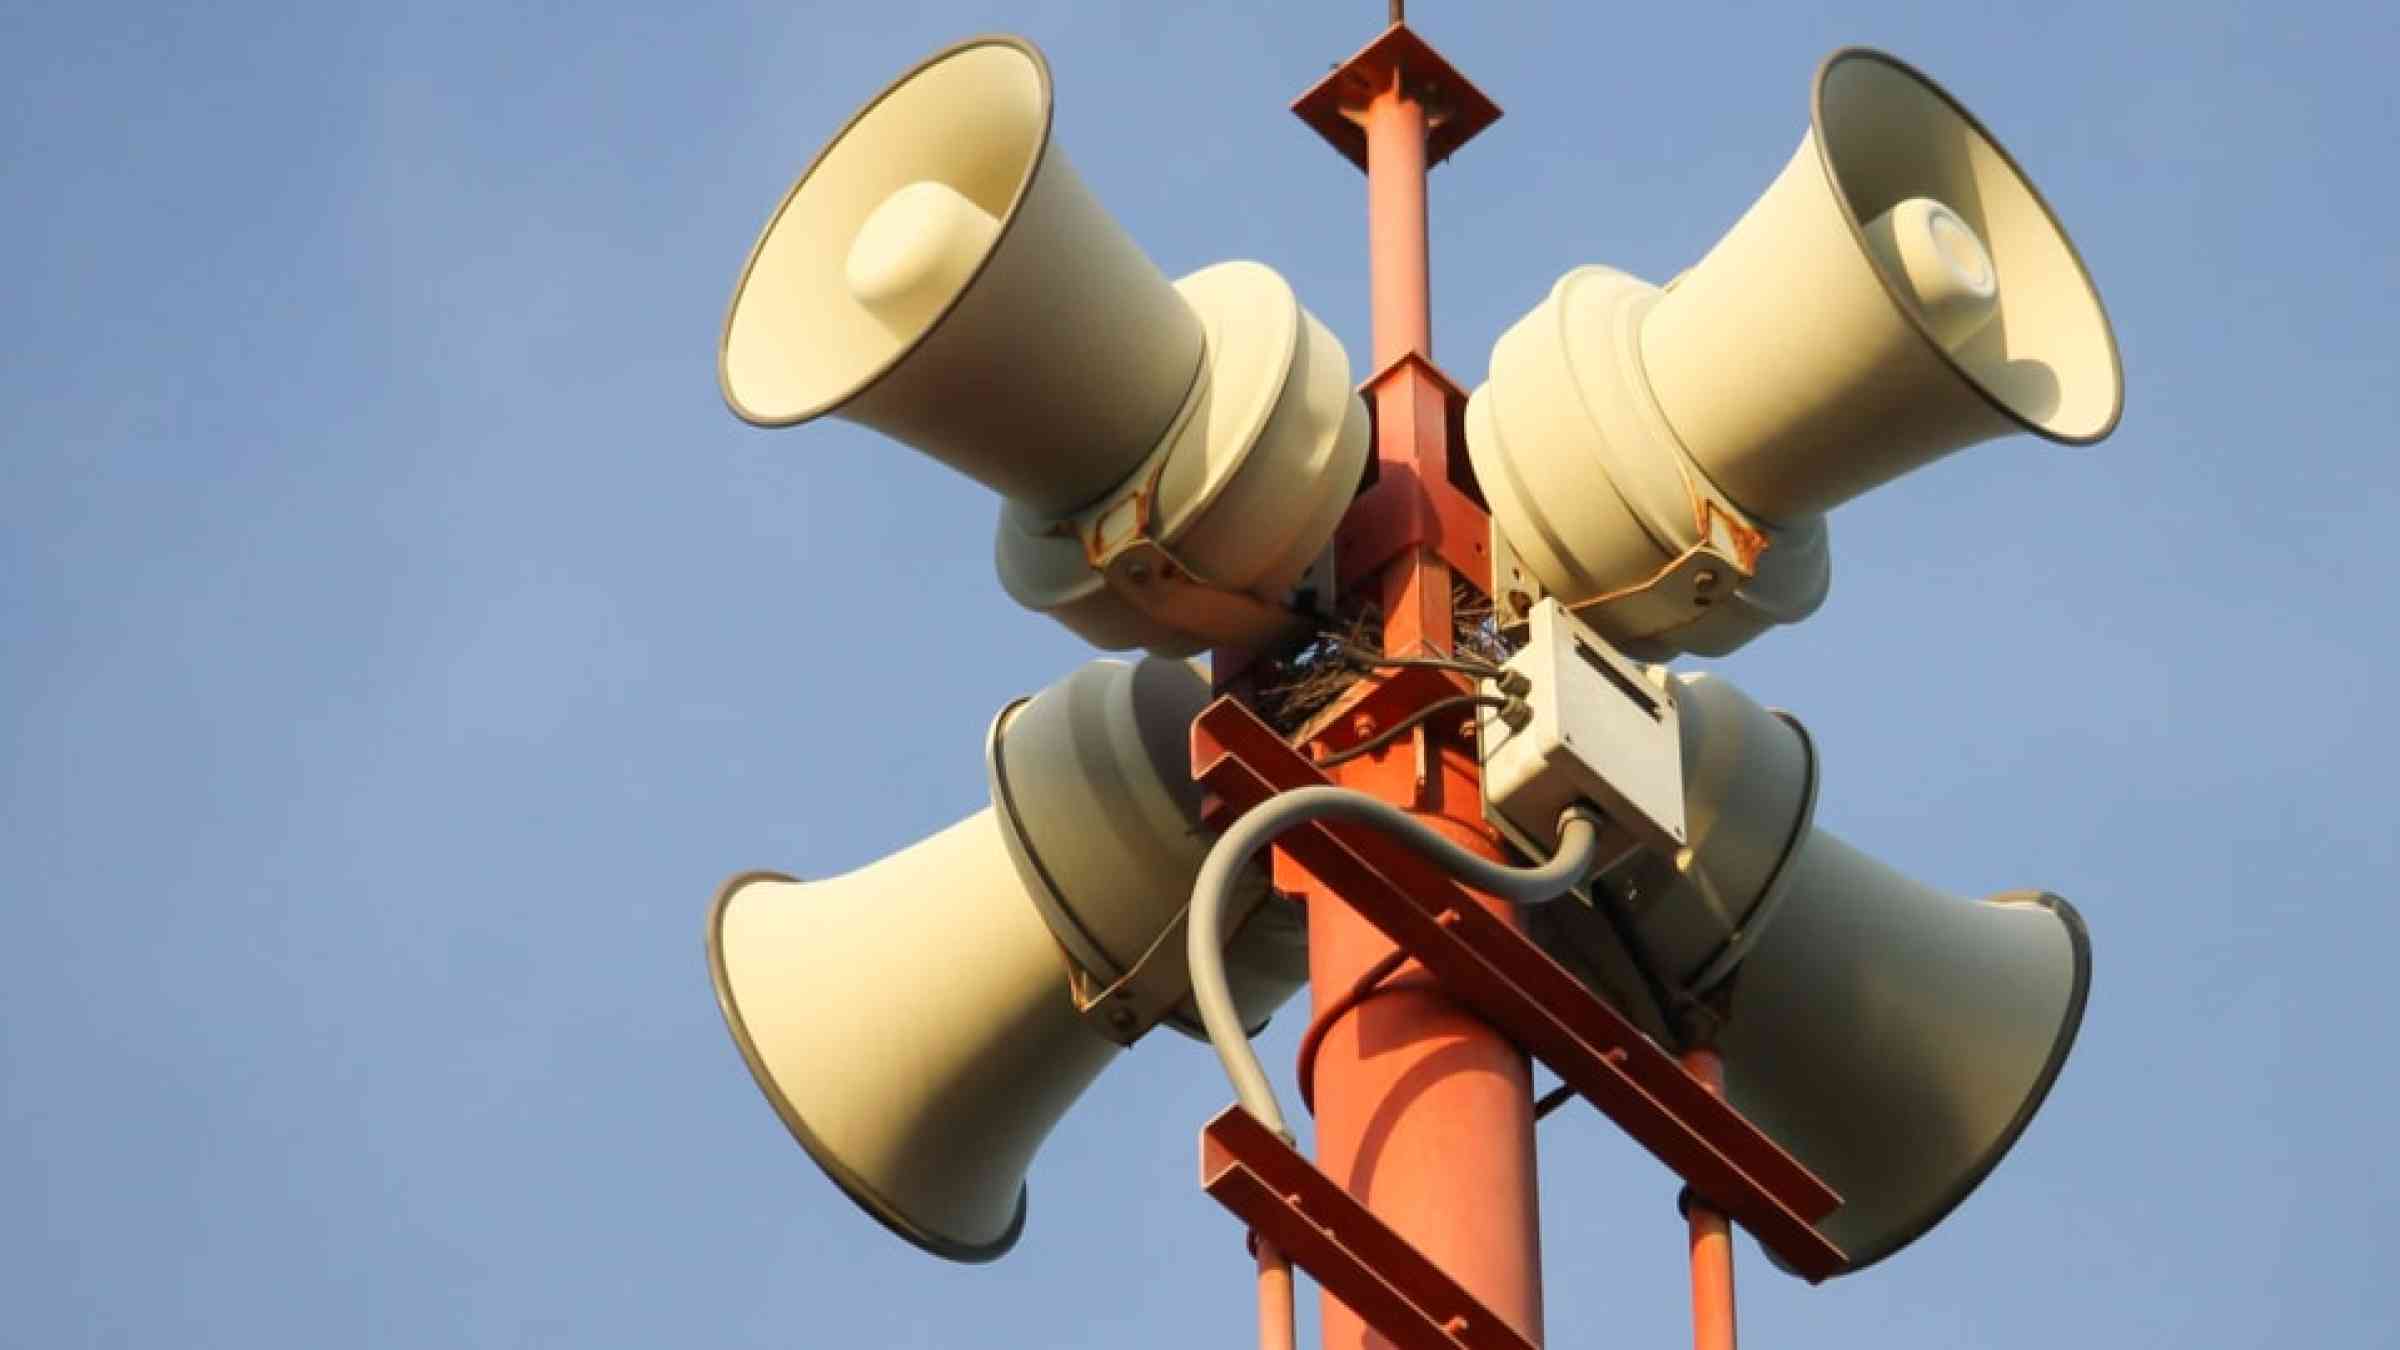 Tsunami siren warning loudspeakers in Thailand